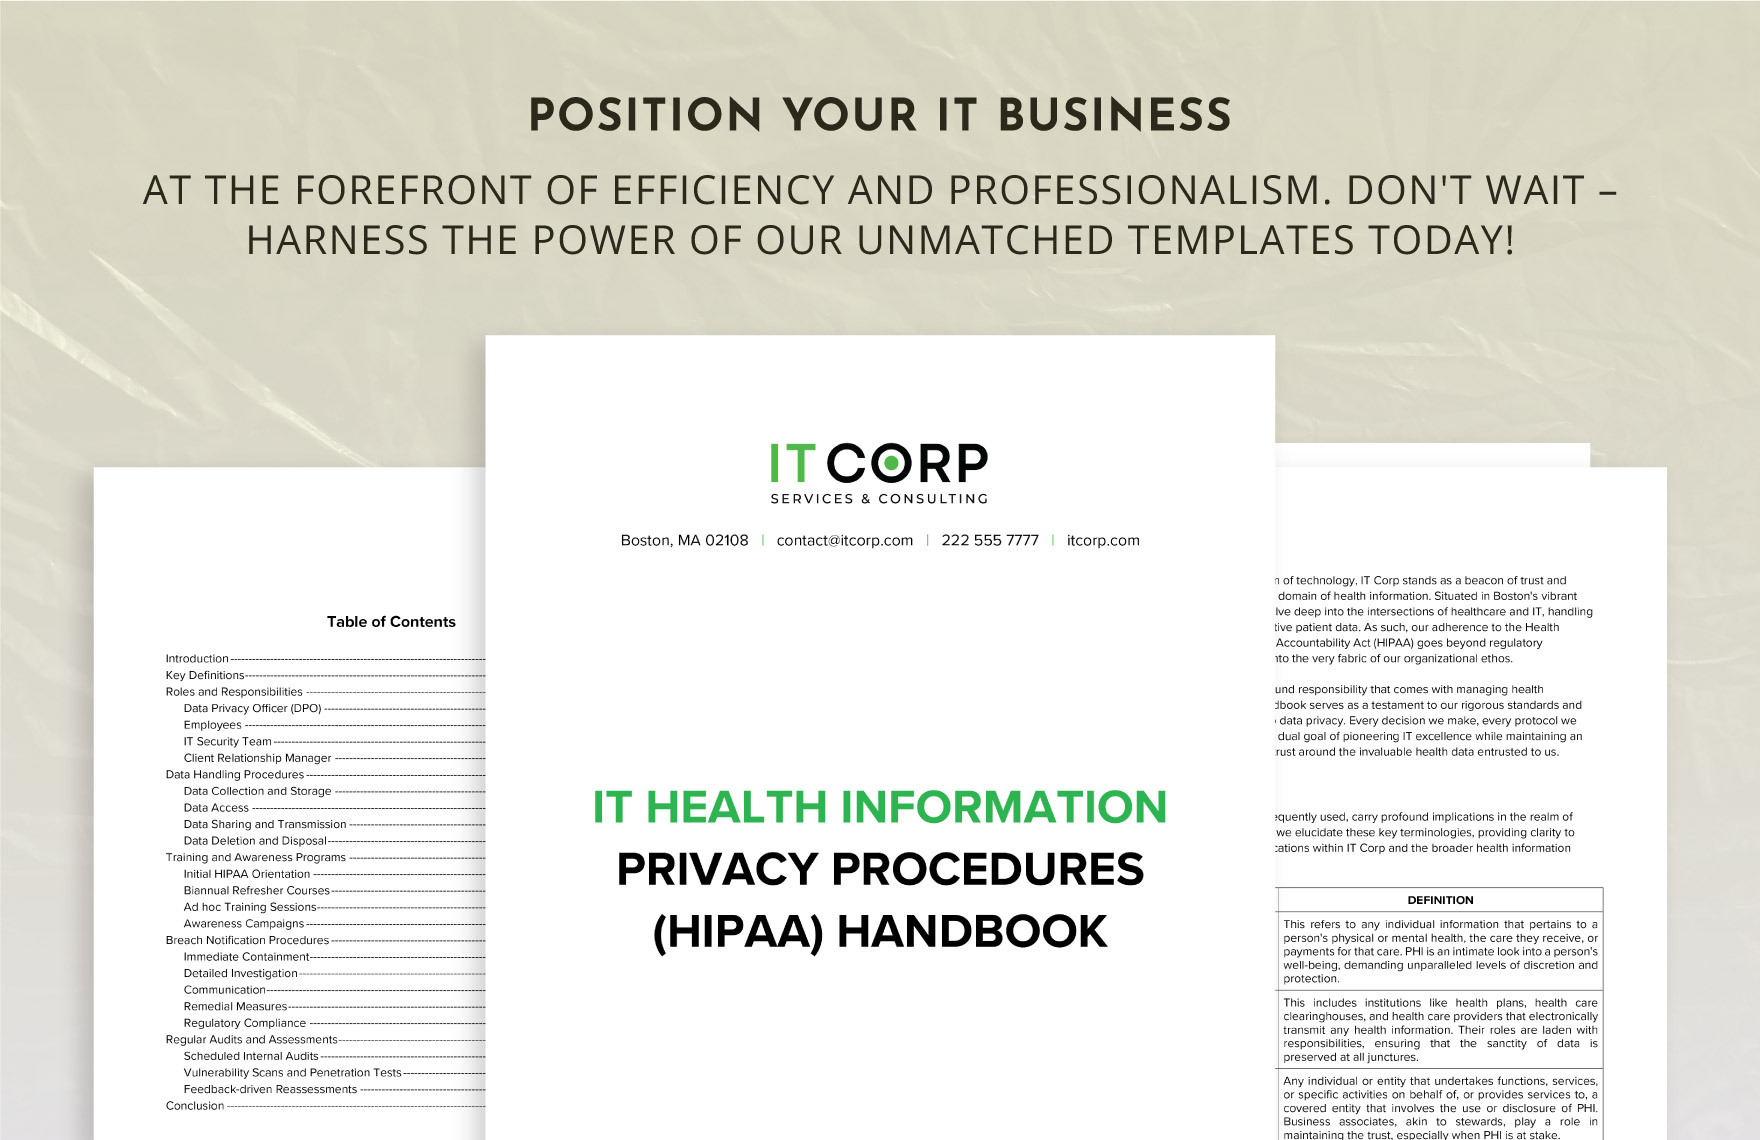 IT Health Information Privacy Procedures (HIPAA) Handbook Template